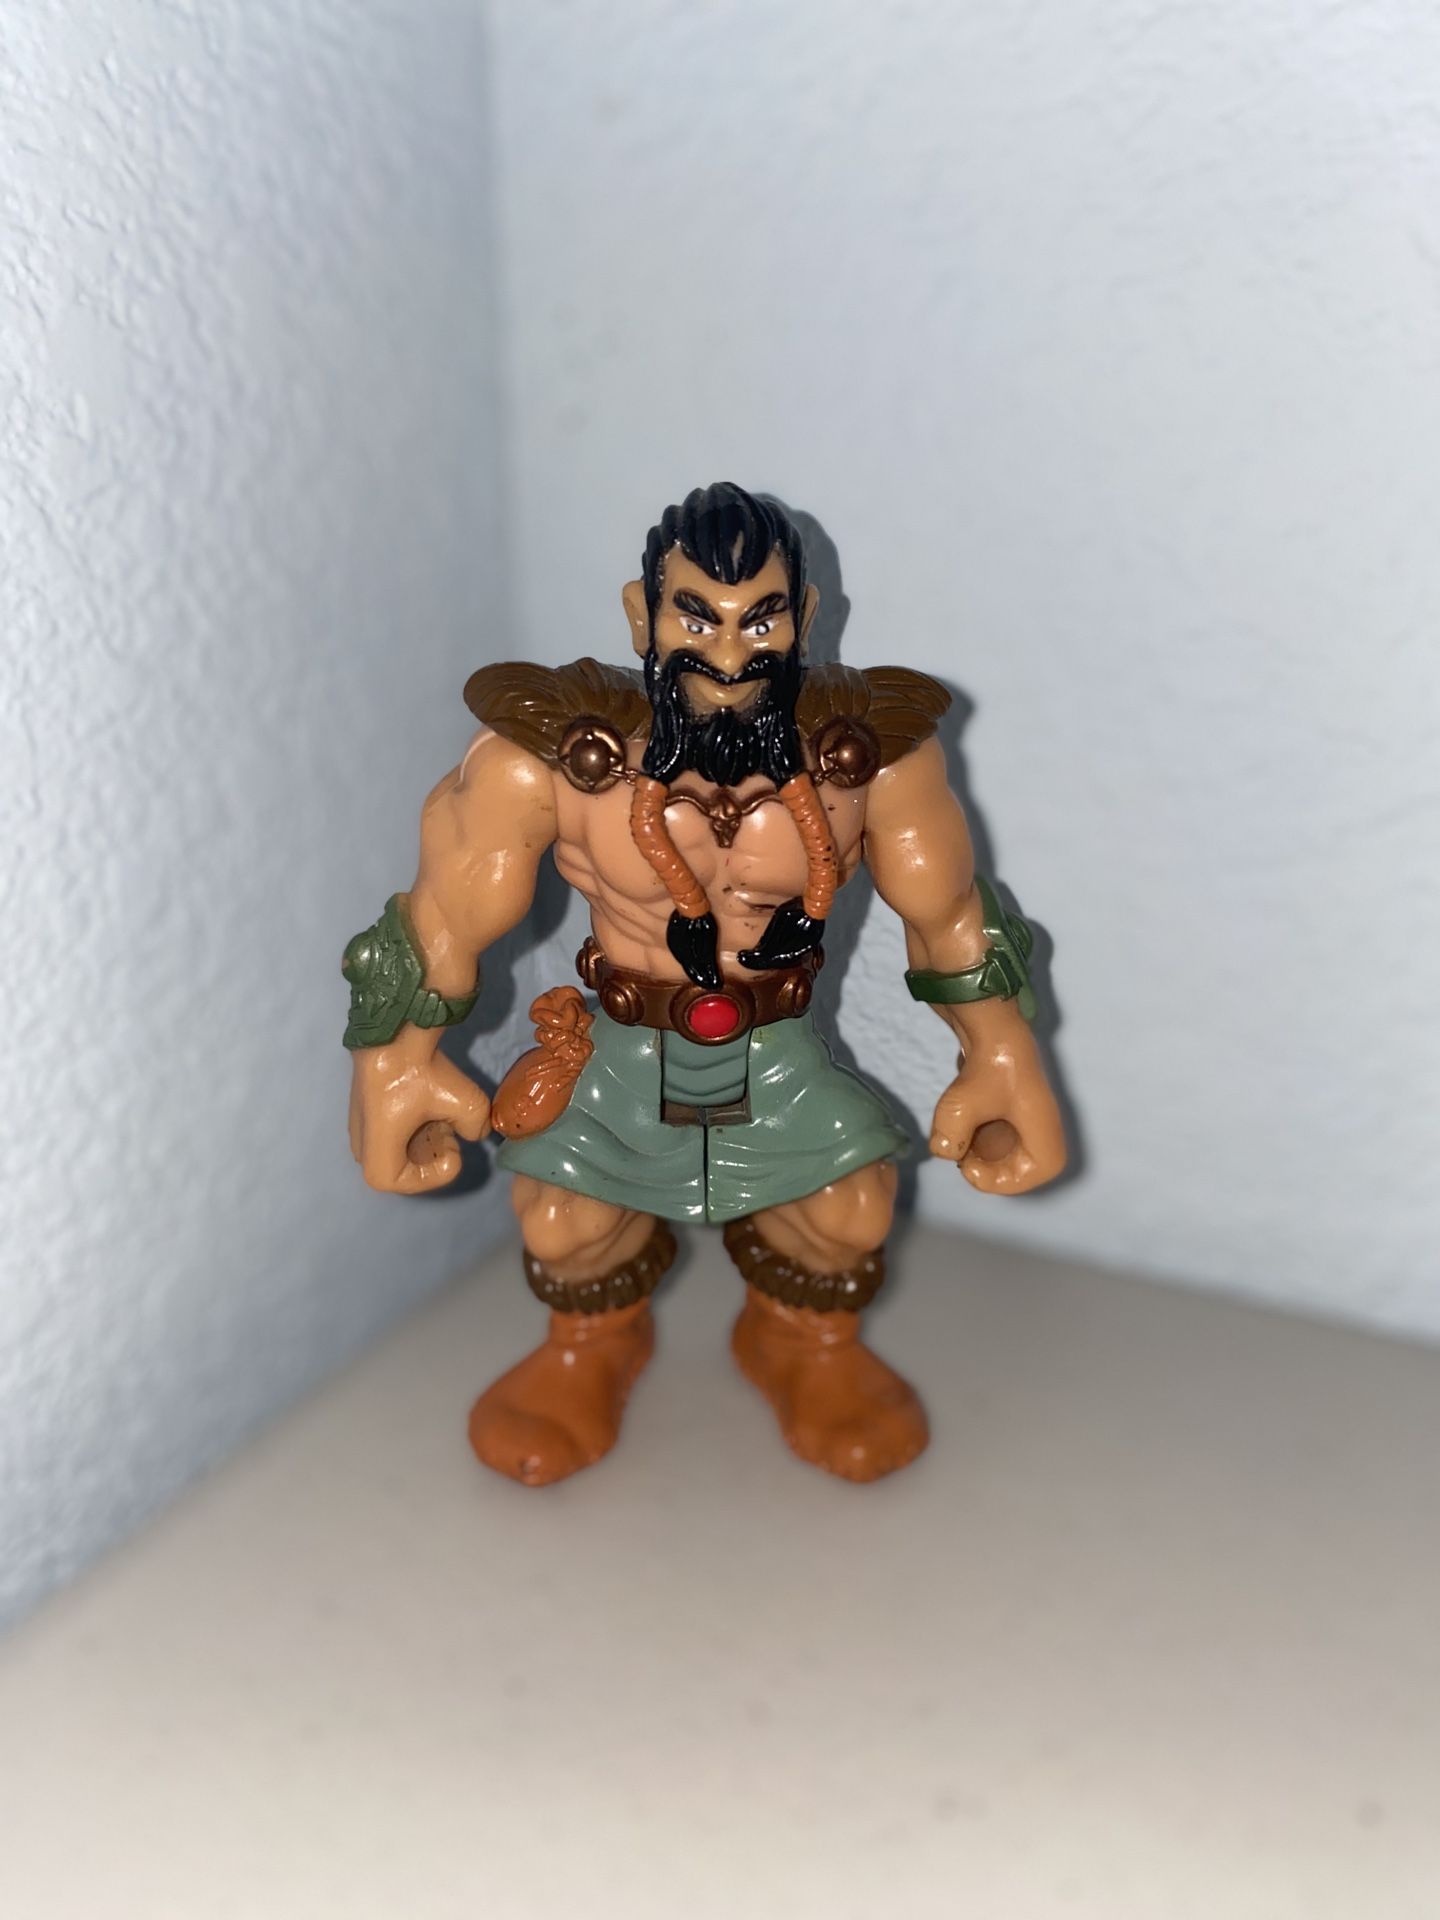 Mattel 2001 Rare Barbarian Warriors Action Figure 5.5" Vintage Toy